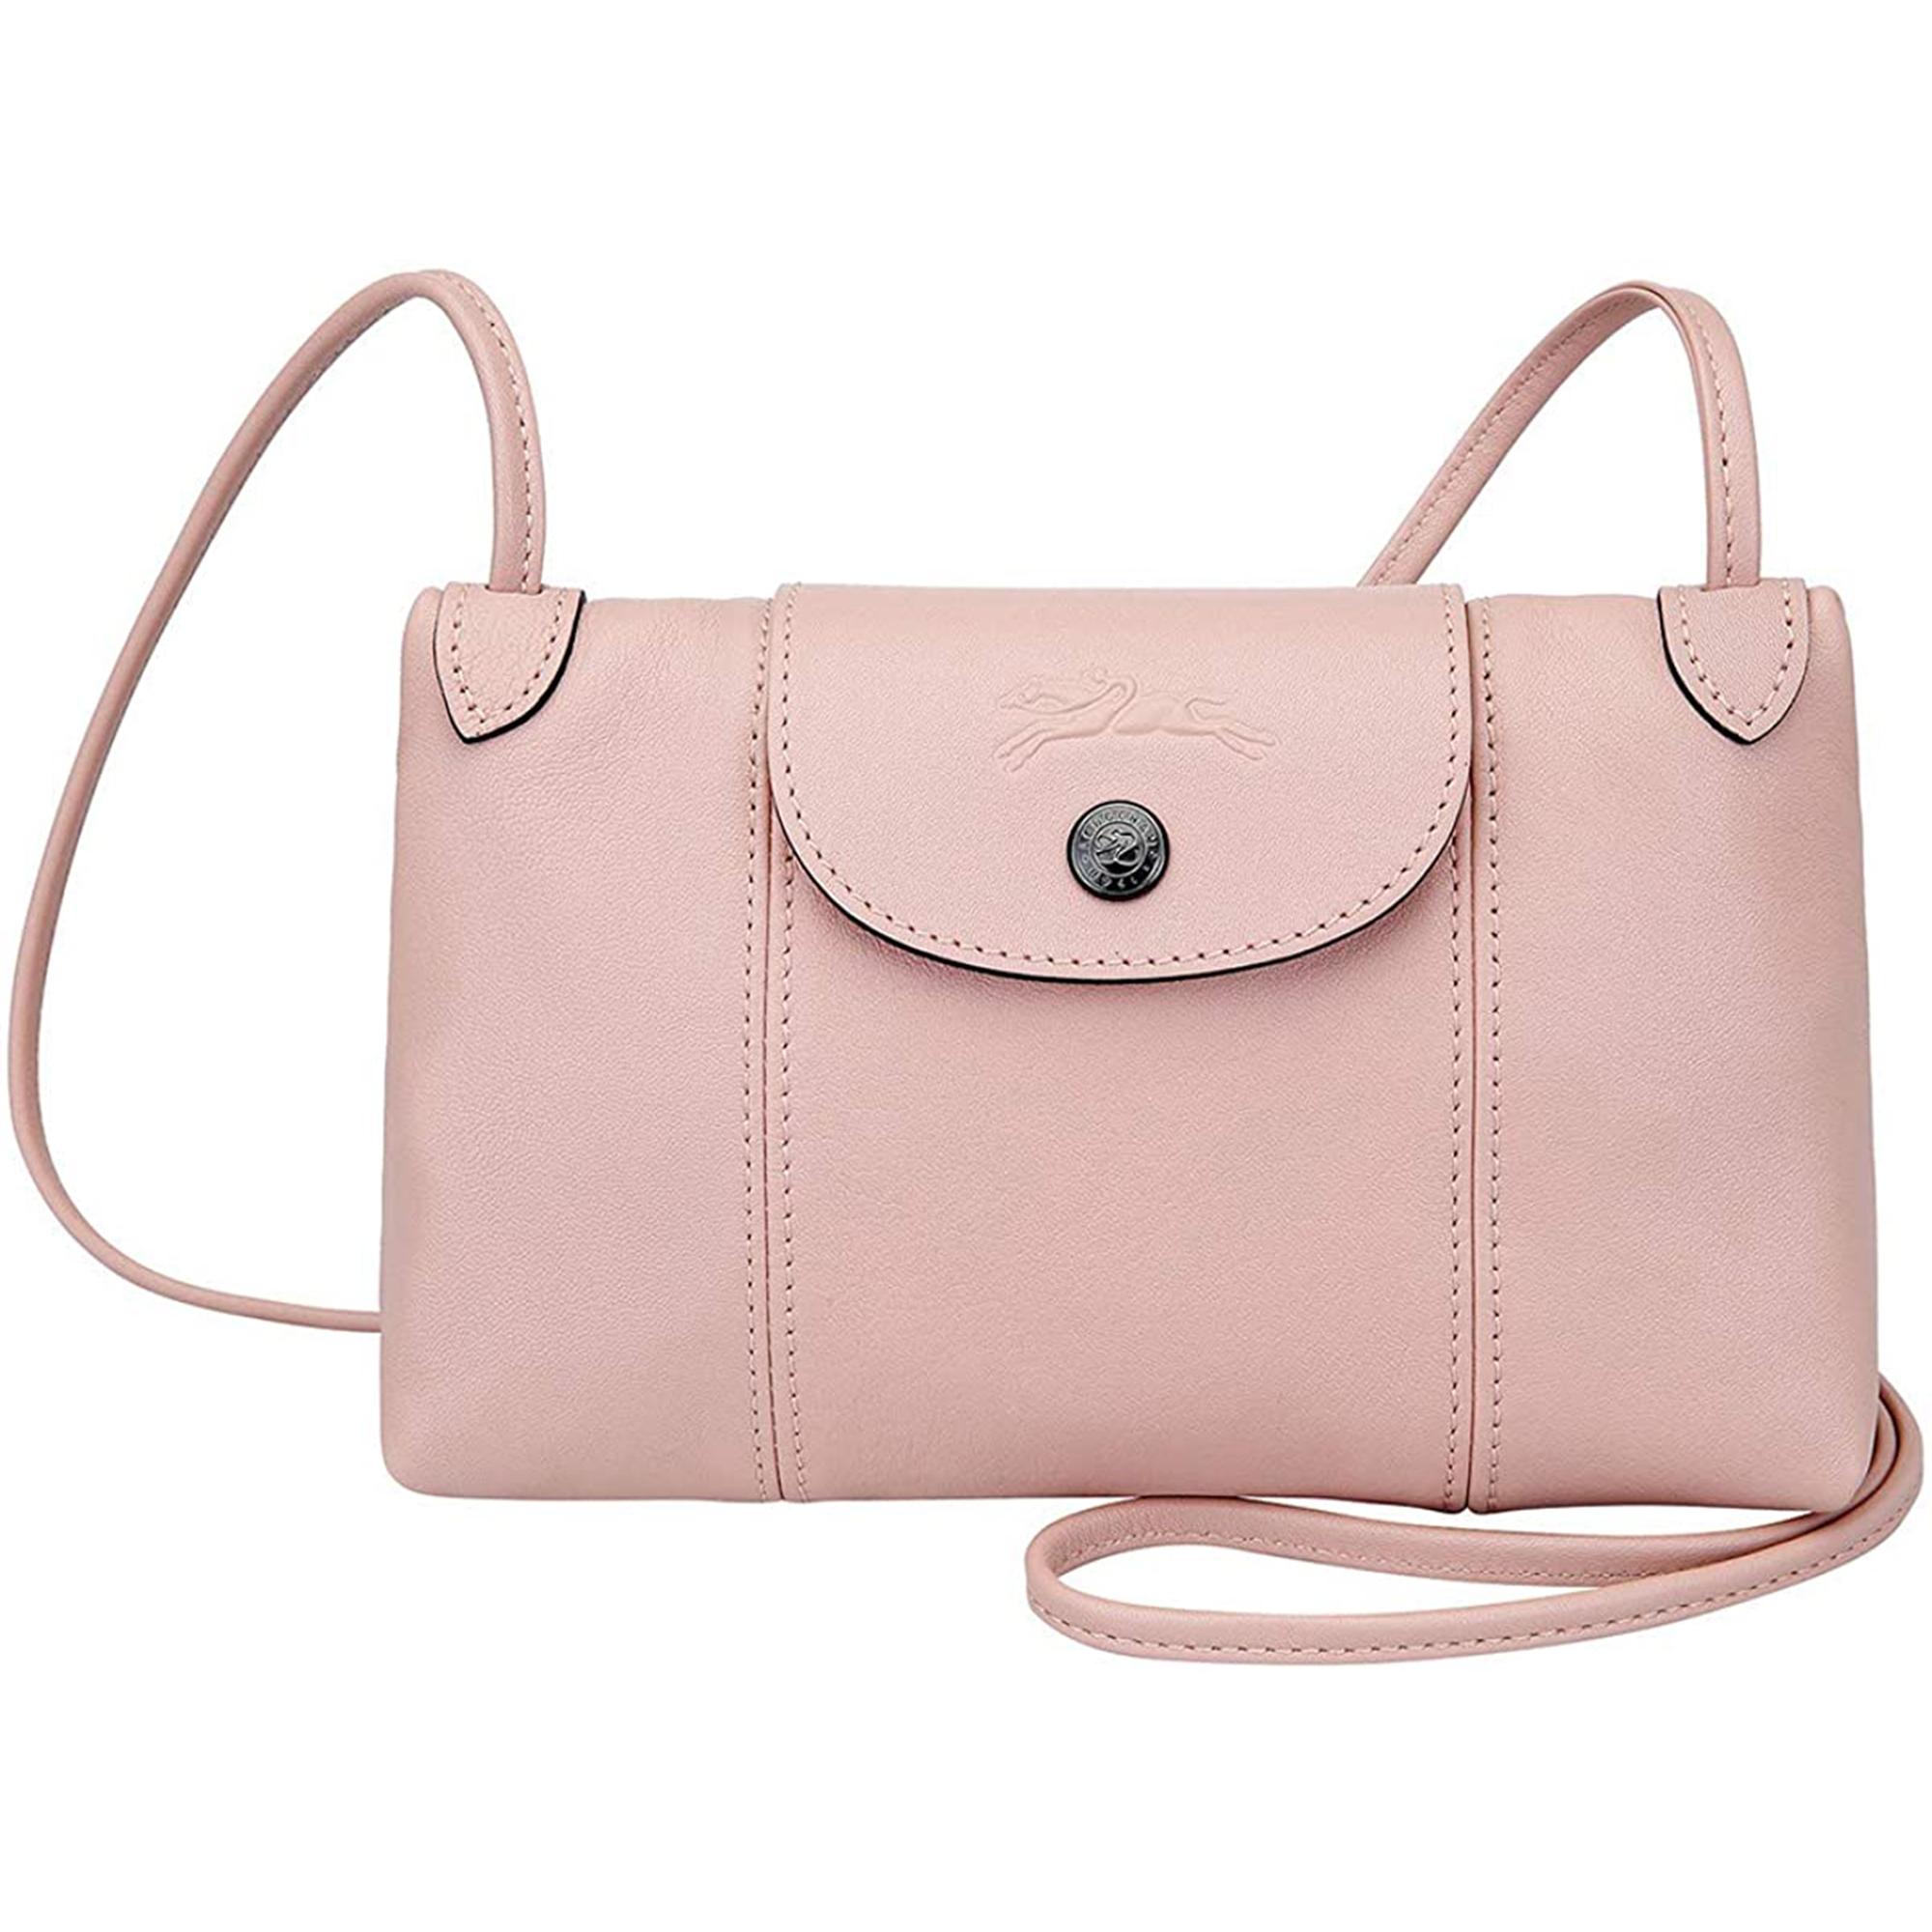 LongChamp Women's Leather Le Pliage Cuir Crossbody Bag Poudre Pink | eBay